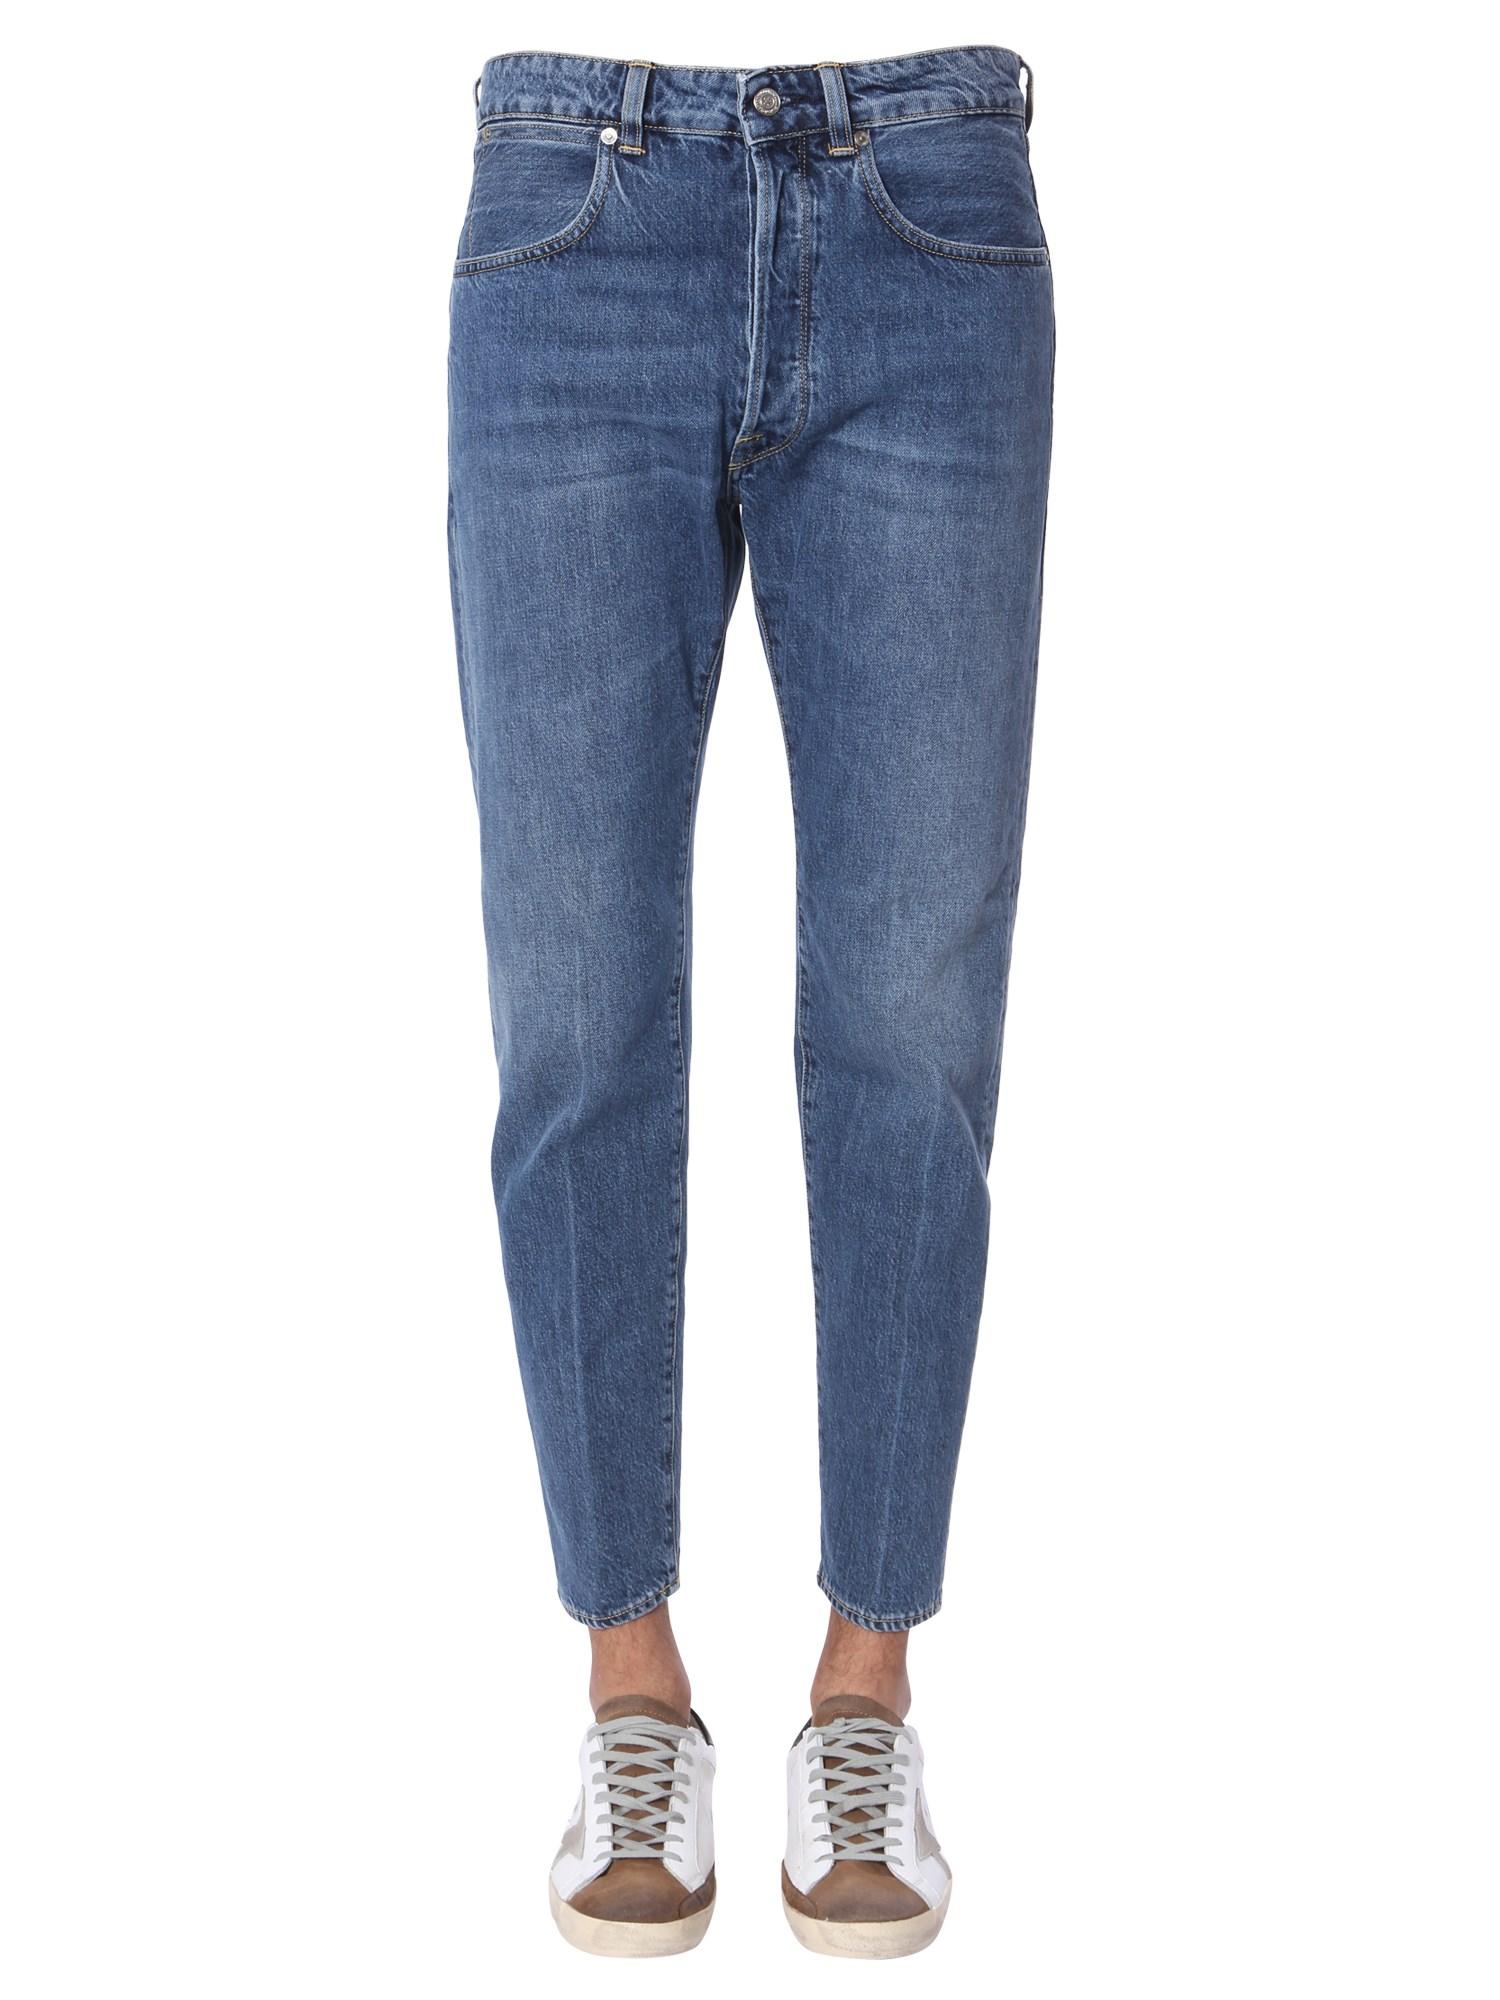 Golden Goose Deluxe Brand Denim Regular Fit Jeans in Blue for Men - Lyst